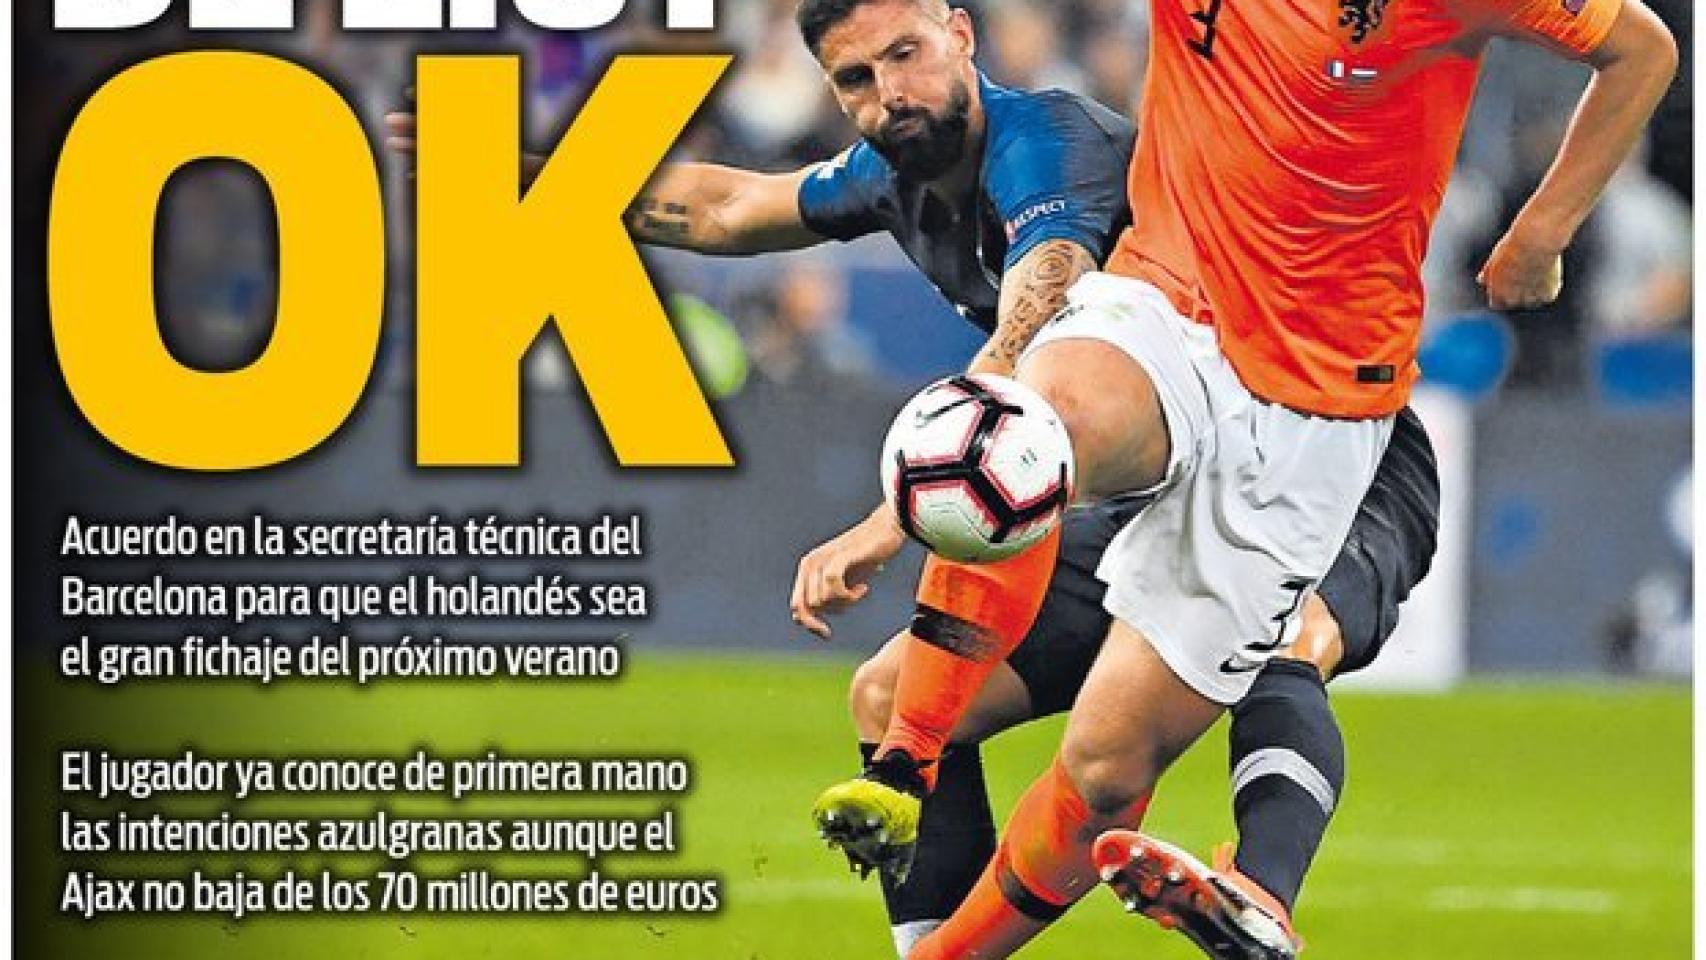 Portada del diario Sport (17/11/2017)